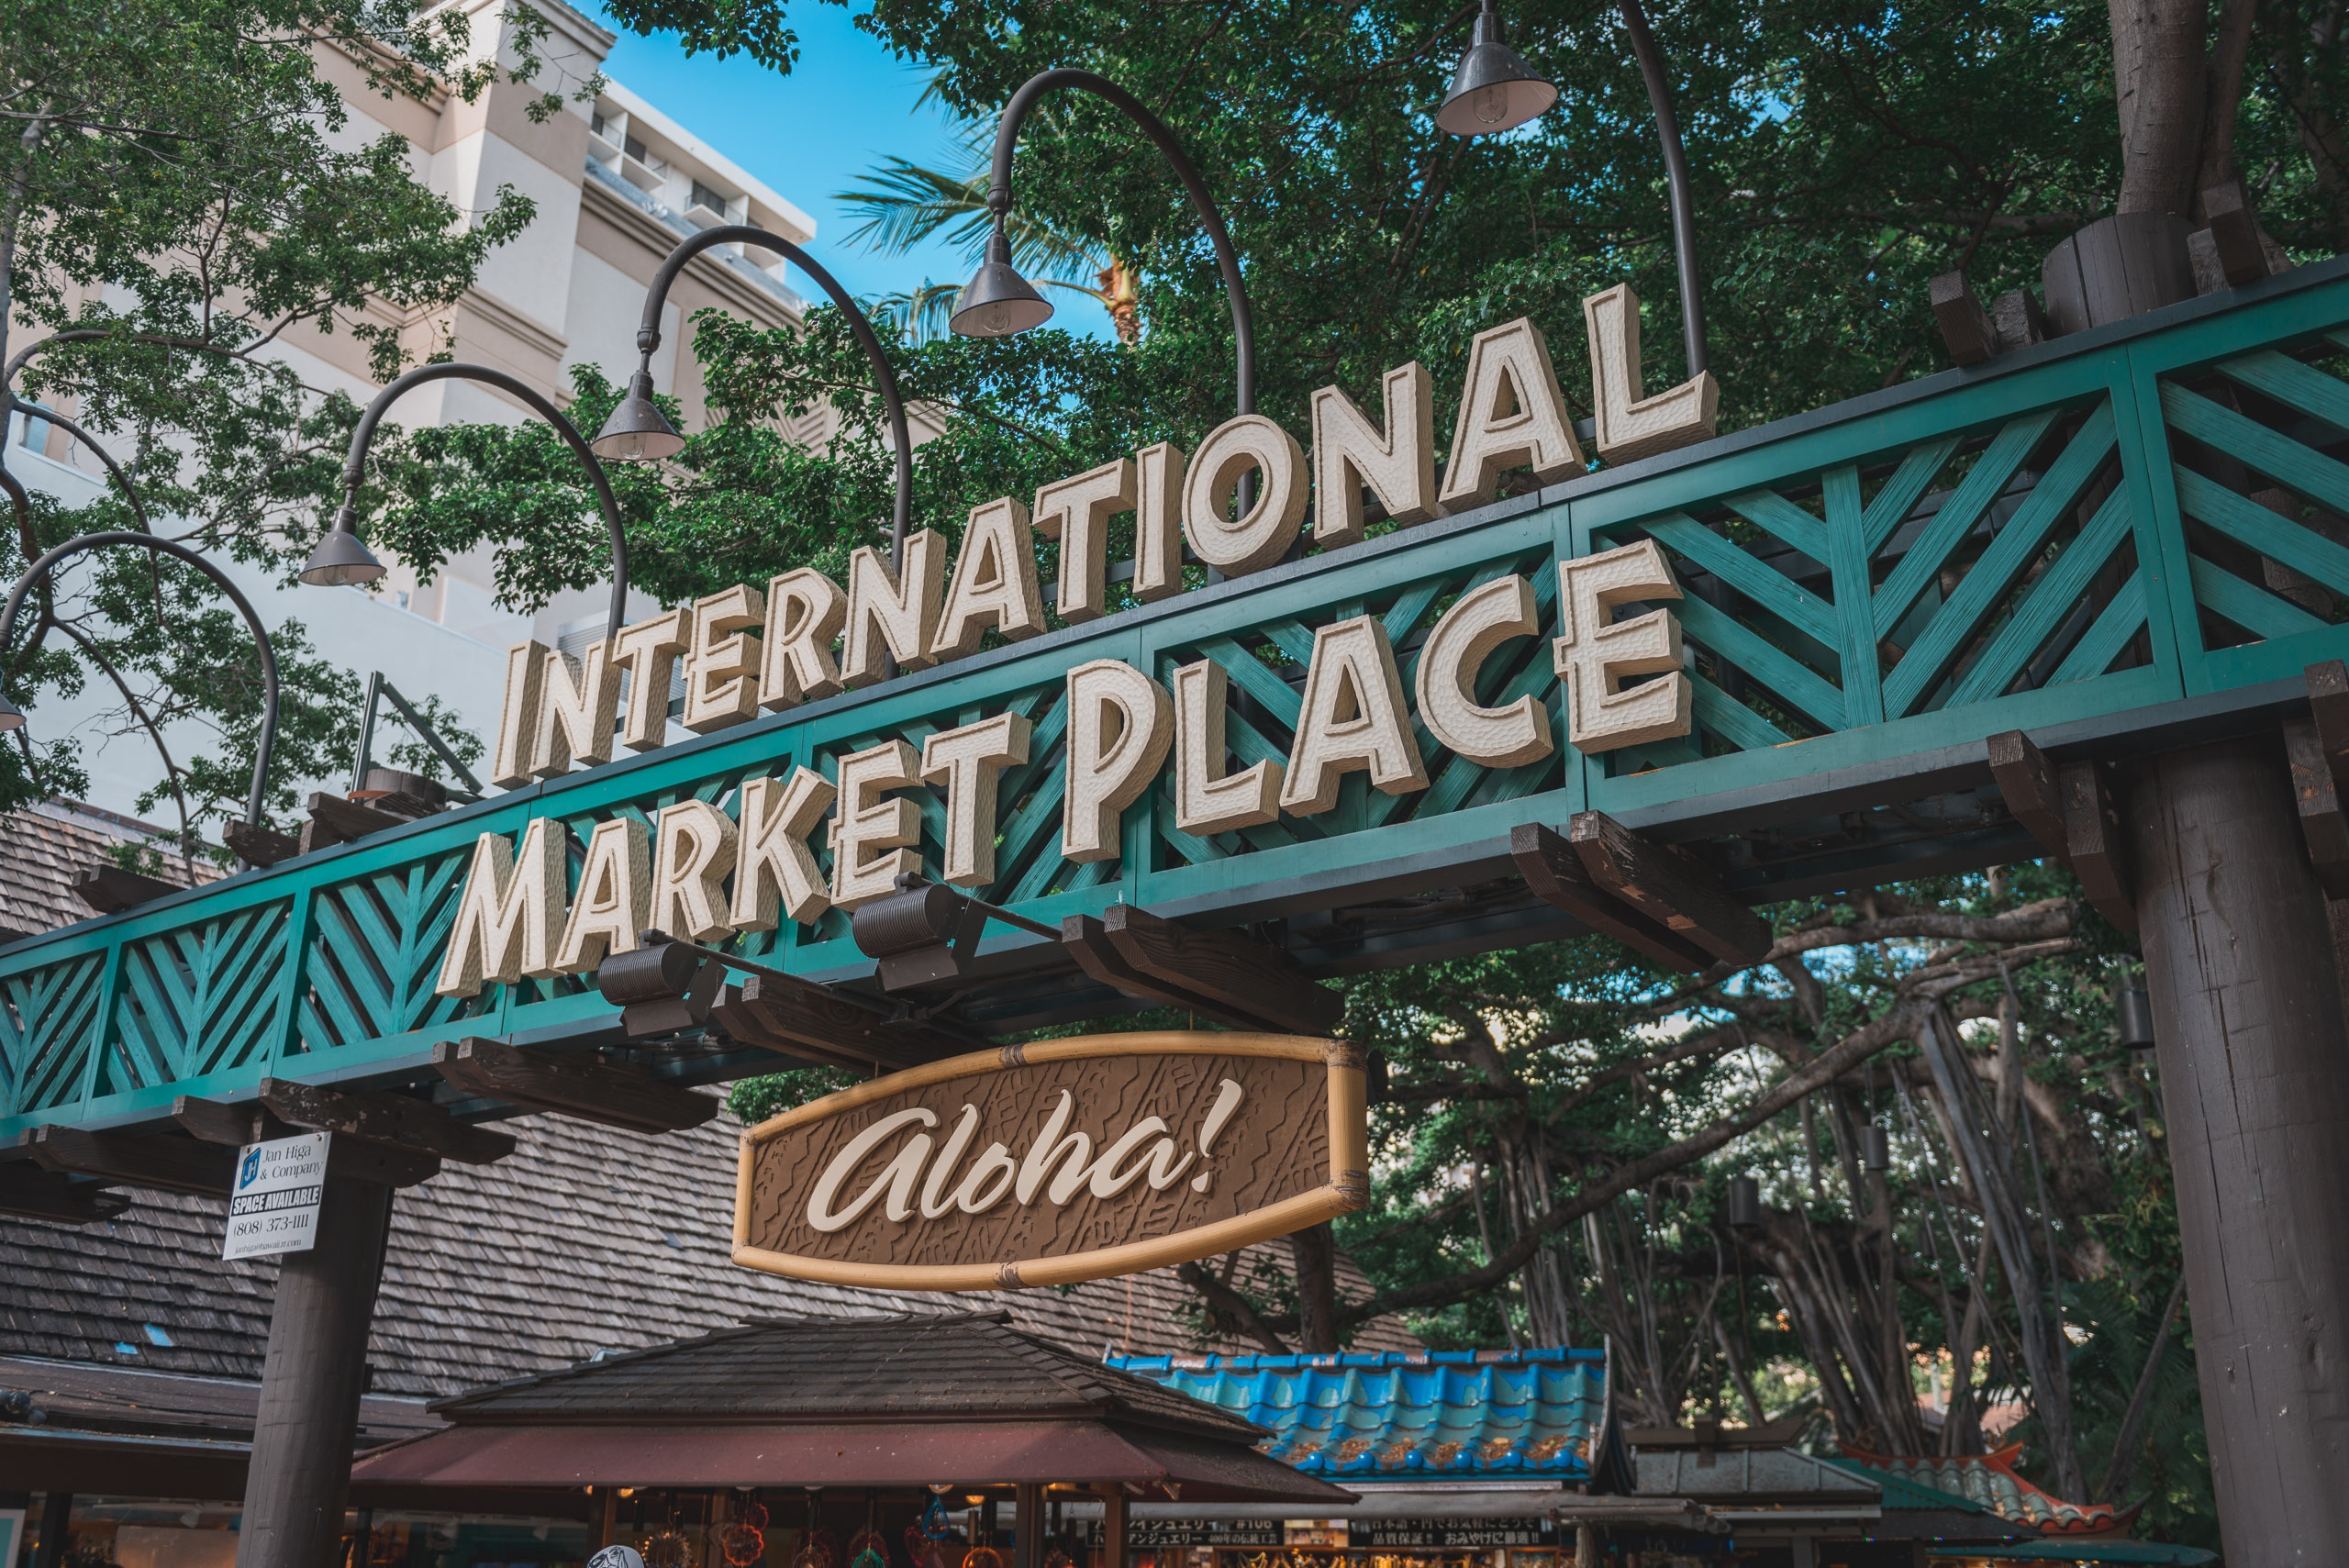 The International Market Place